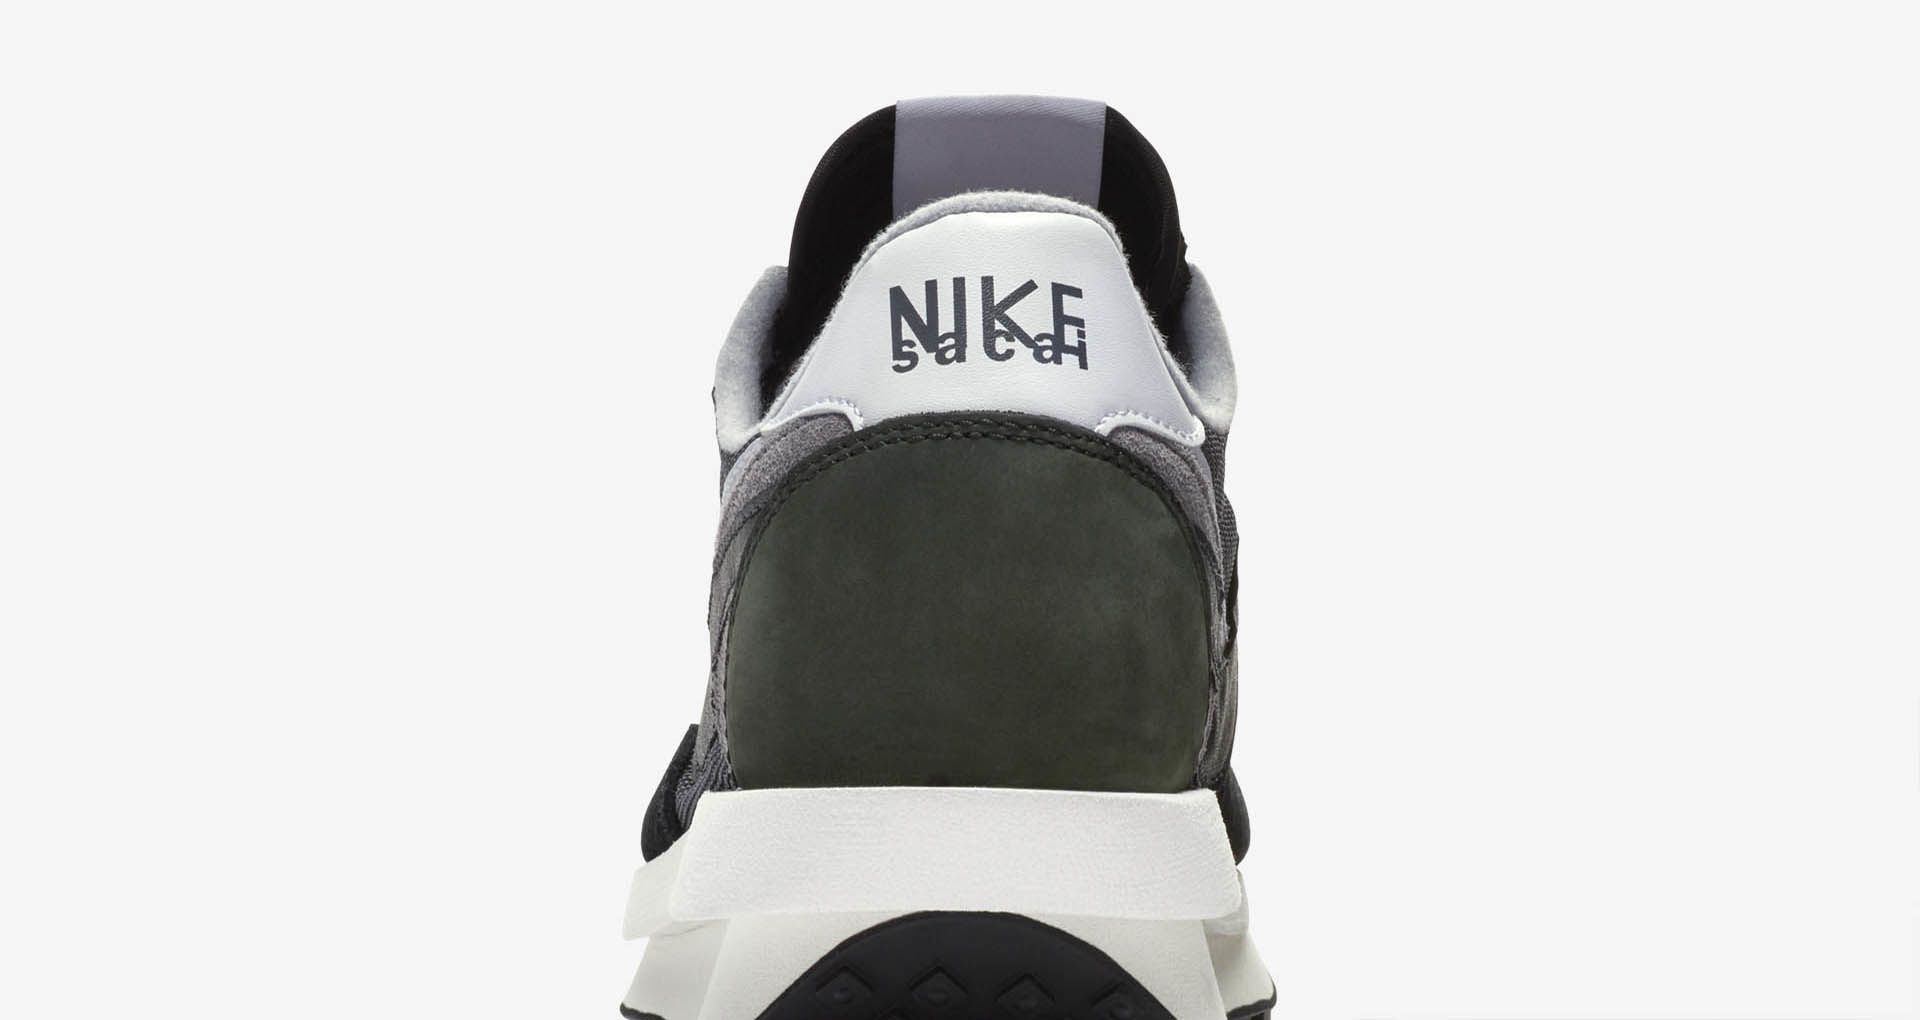 sacai x ナイキ LDワッフル 'Black' 発売日. Nike SNKRS JP